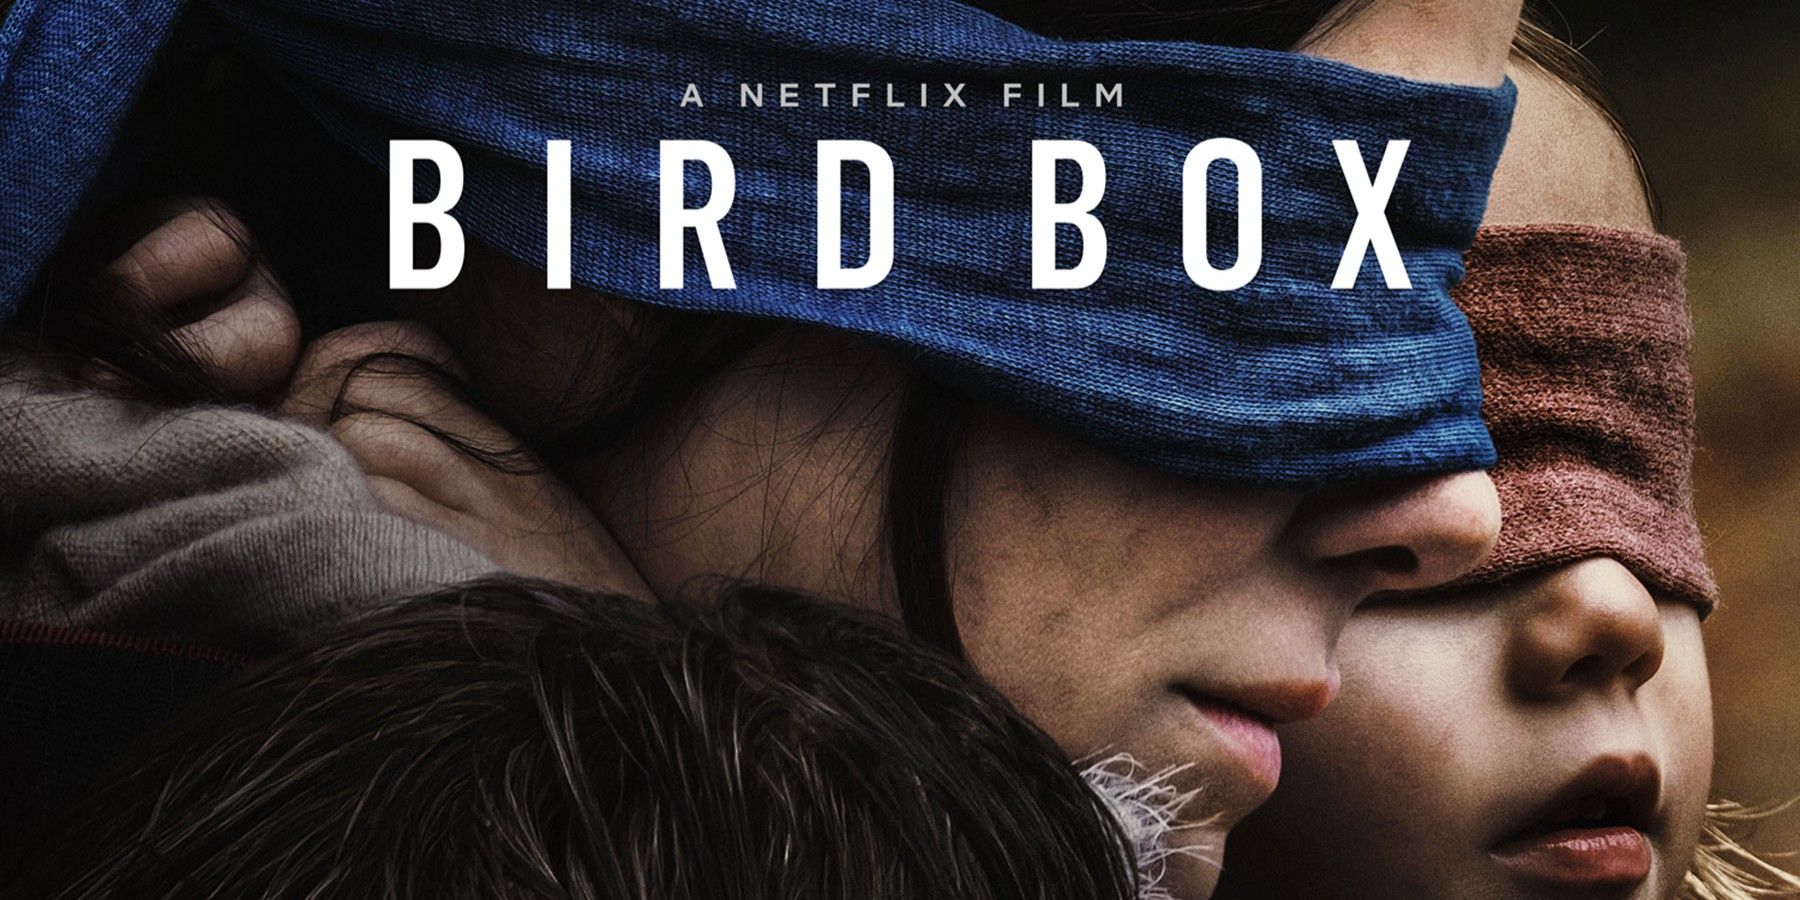 bird box movie review essay